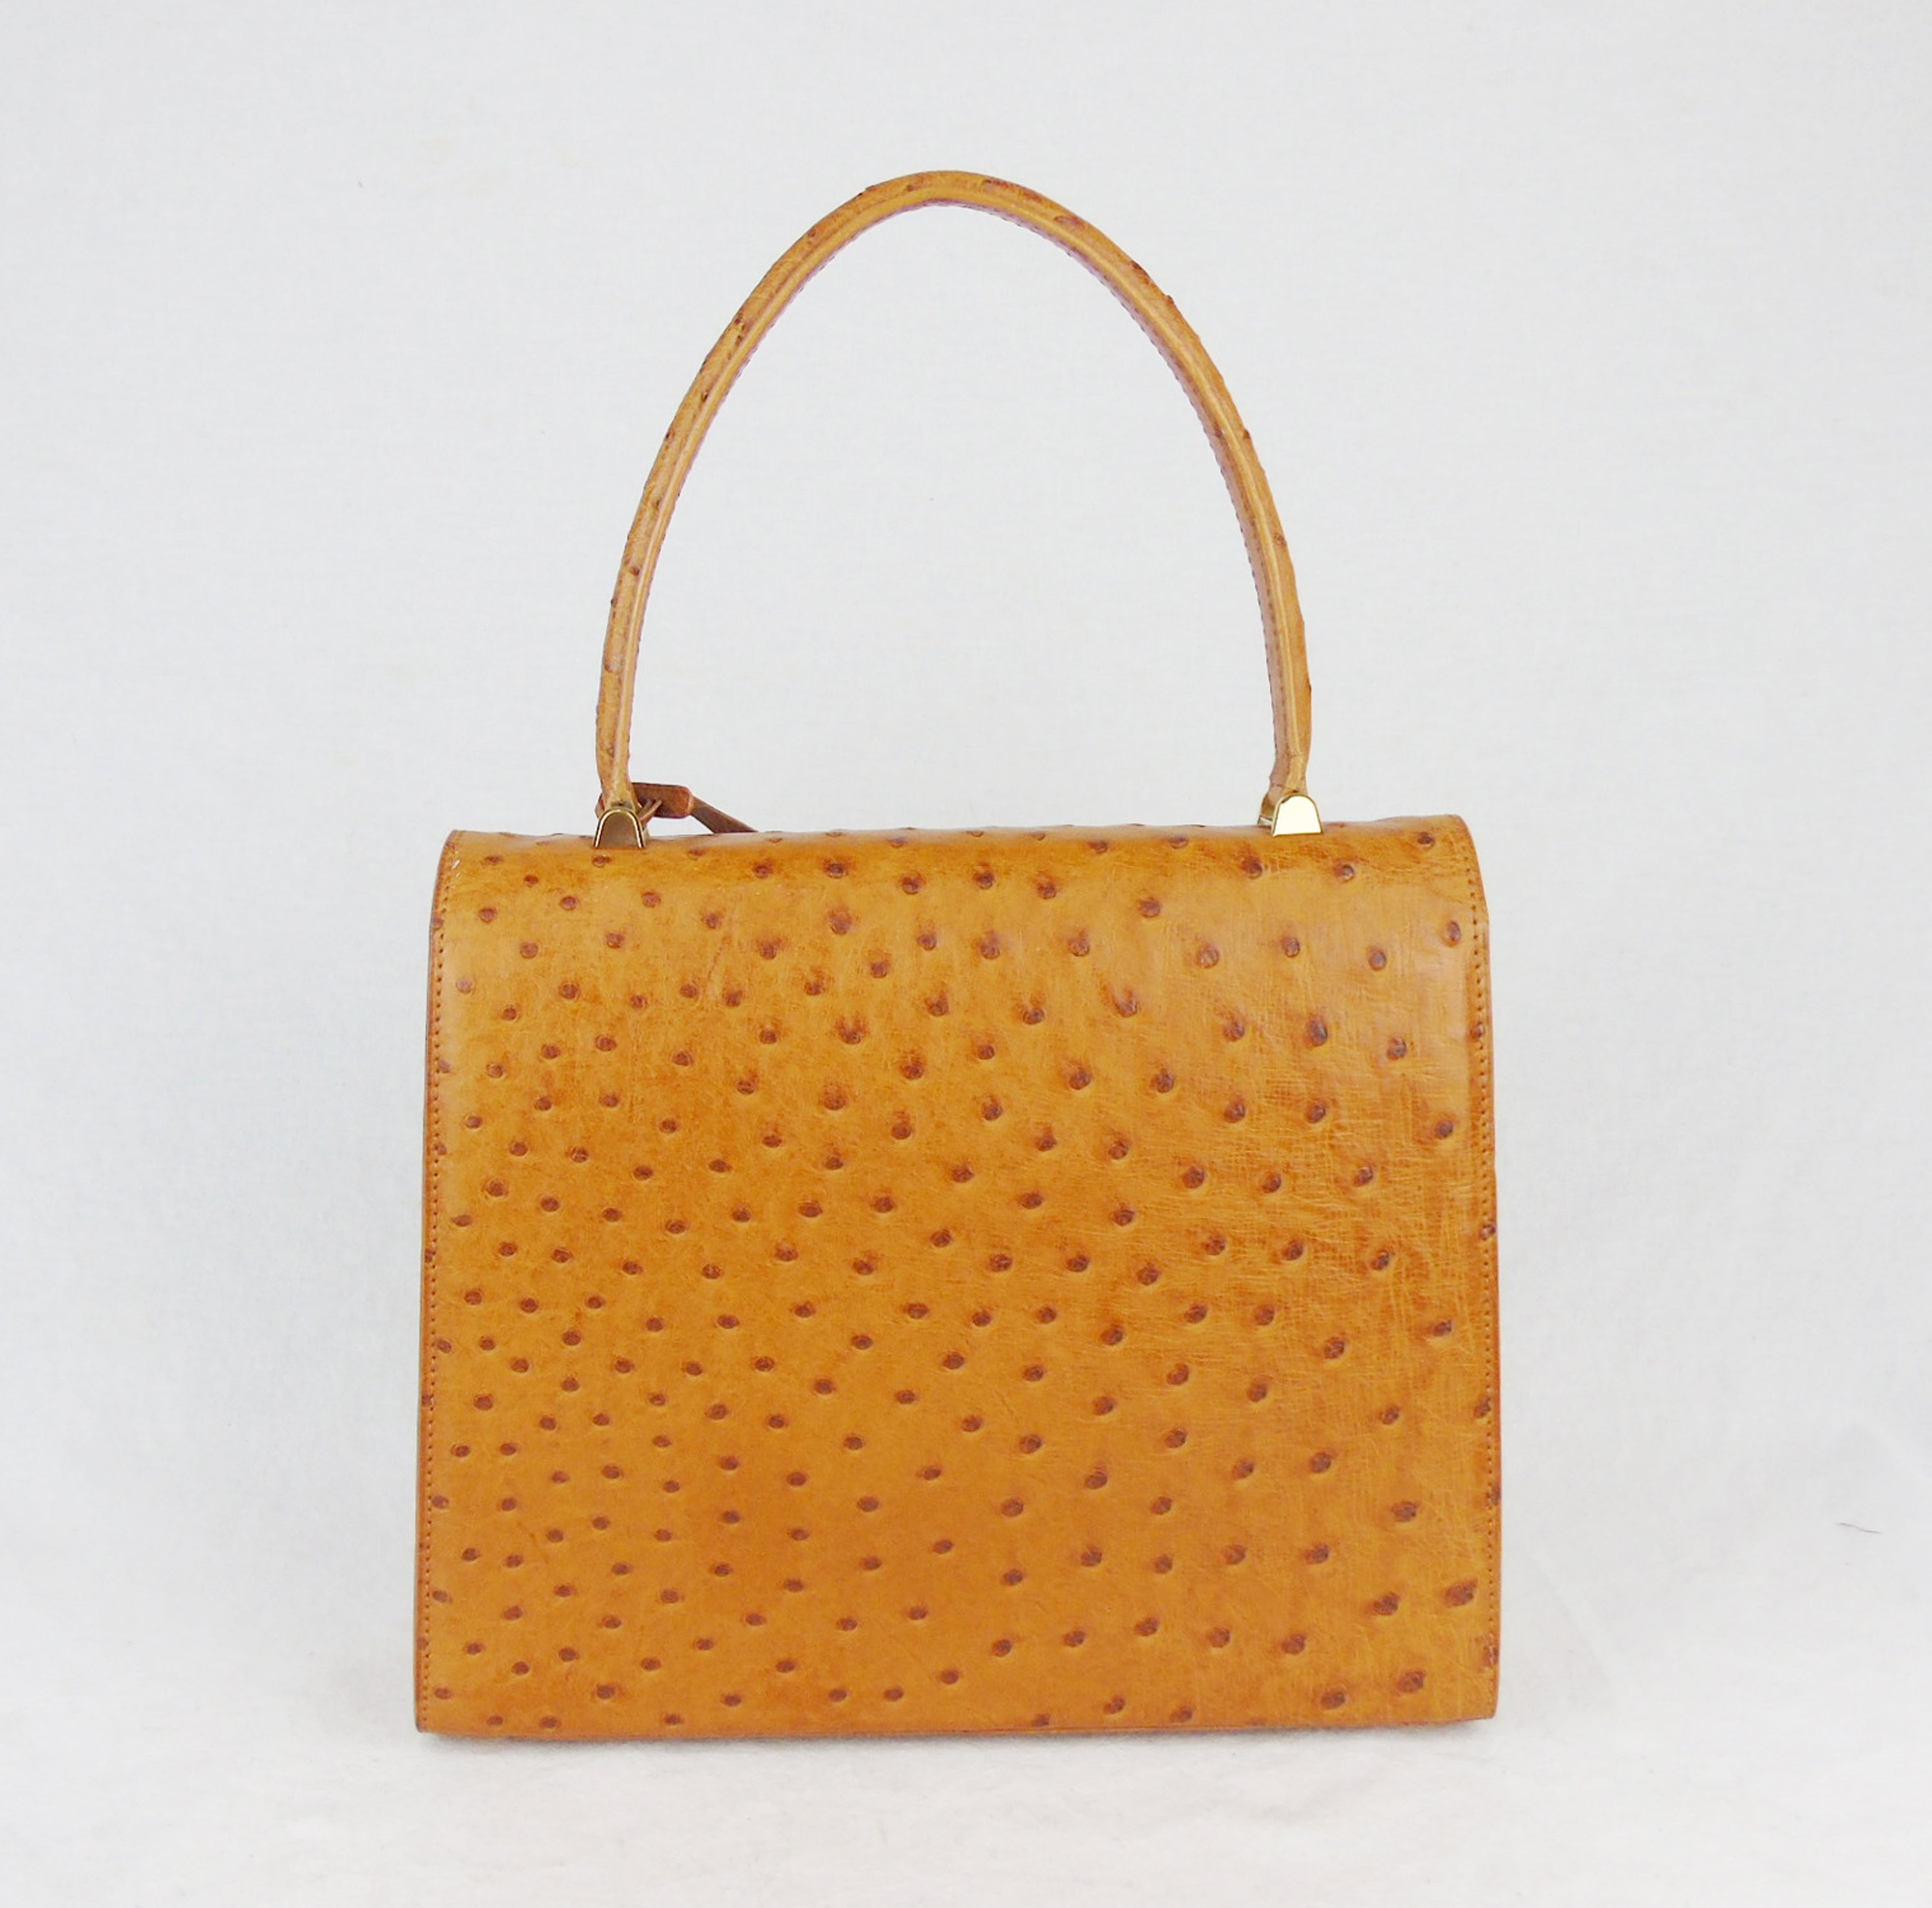 LOUIS VUITTON 'Malsherbes' Limited Edition handbag in tan ostrich leat Loubi, Lou & Coco